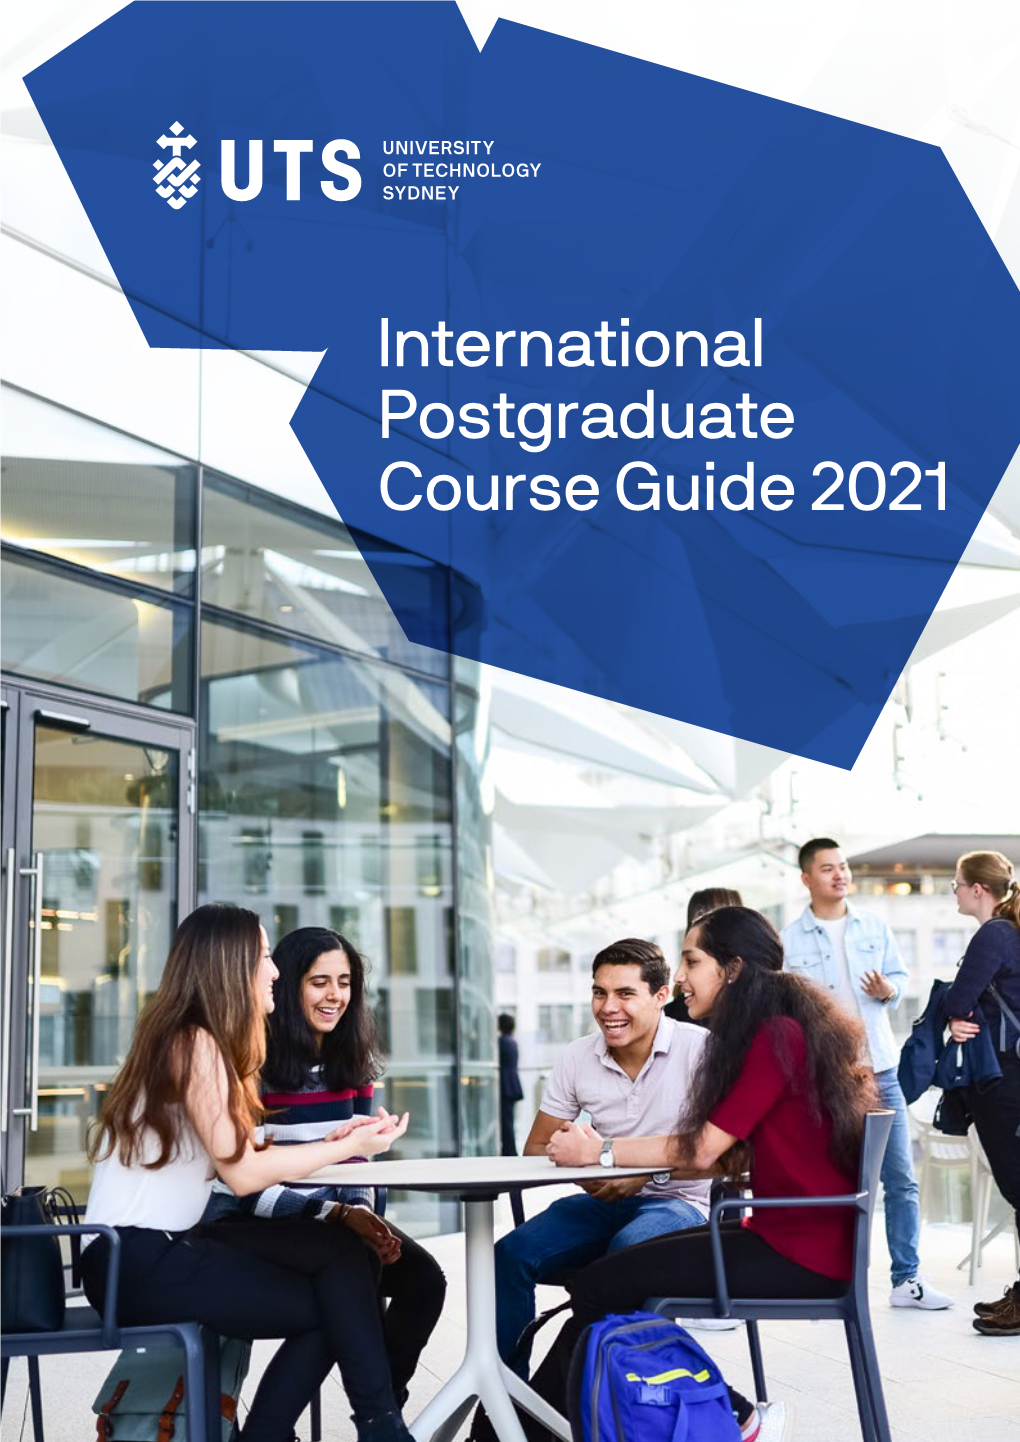 International Postgraduate Course Guide 2021 Welcome